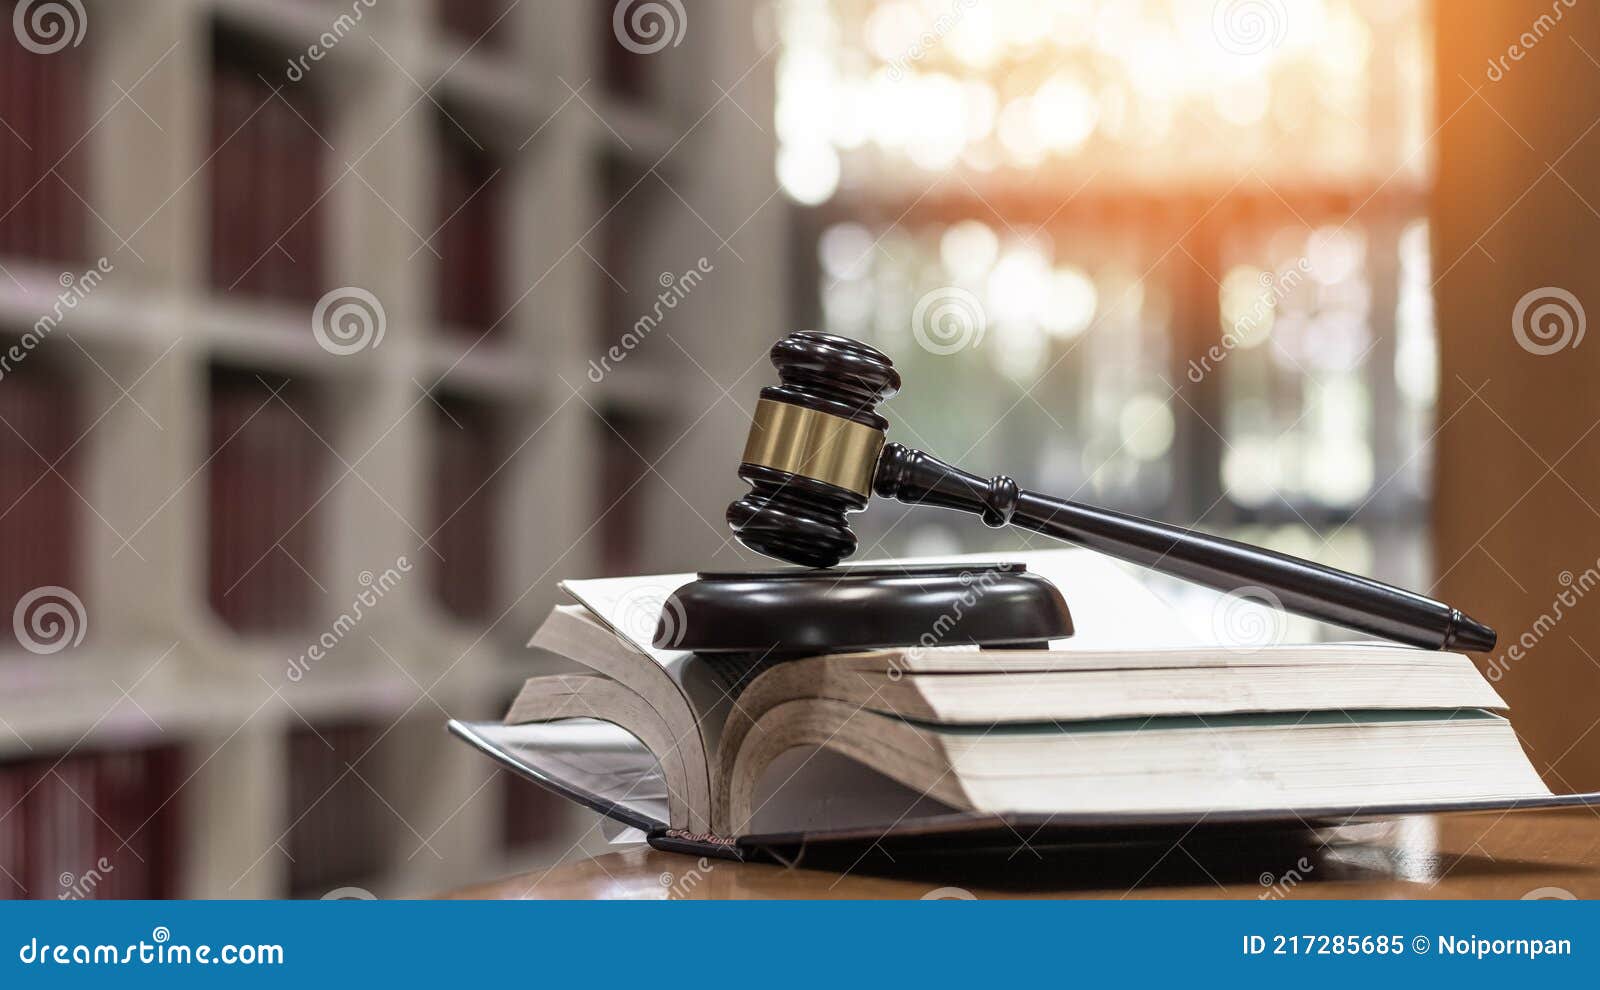 law, legal judgement, legistration, litigation, court verdict, judicial system and civil right and social justice concept